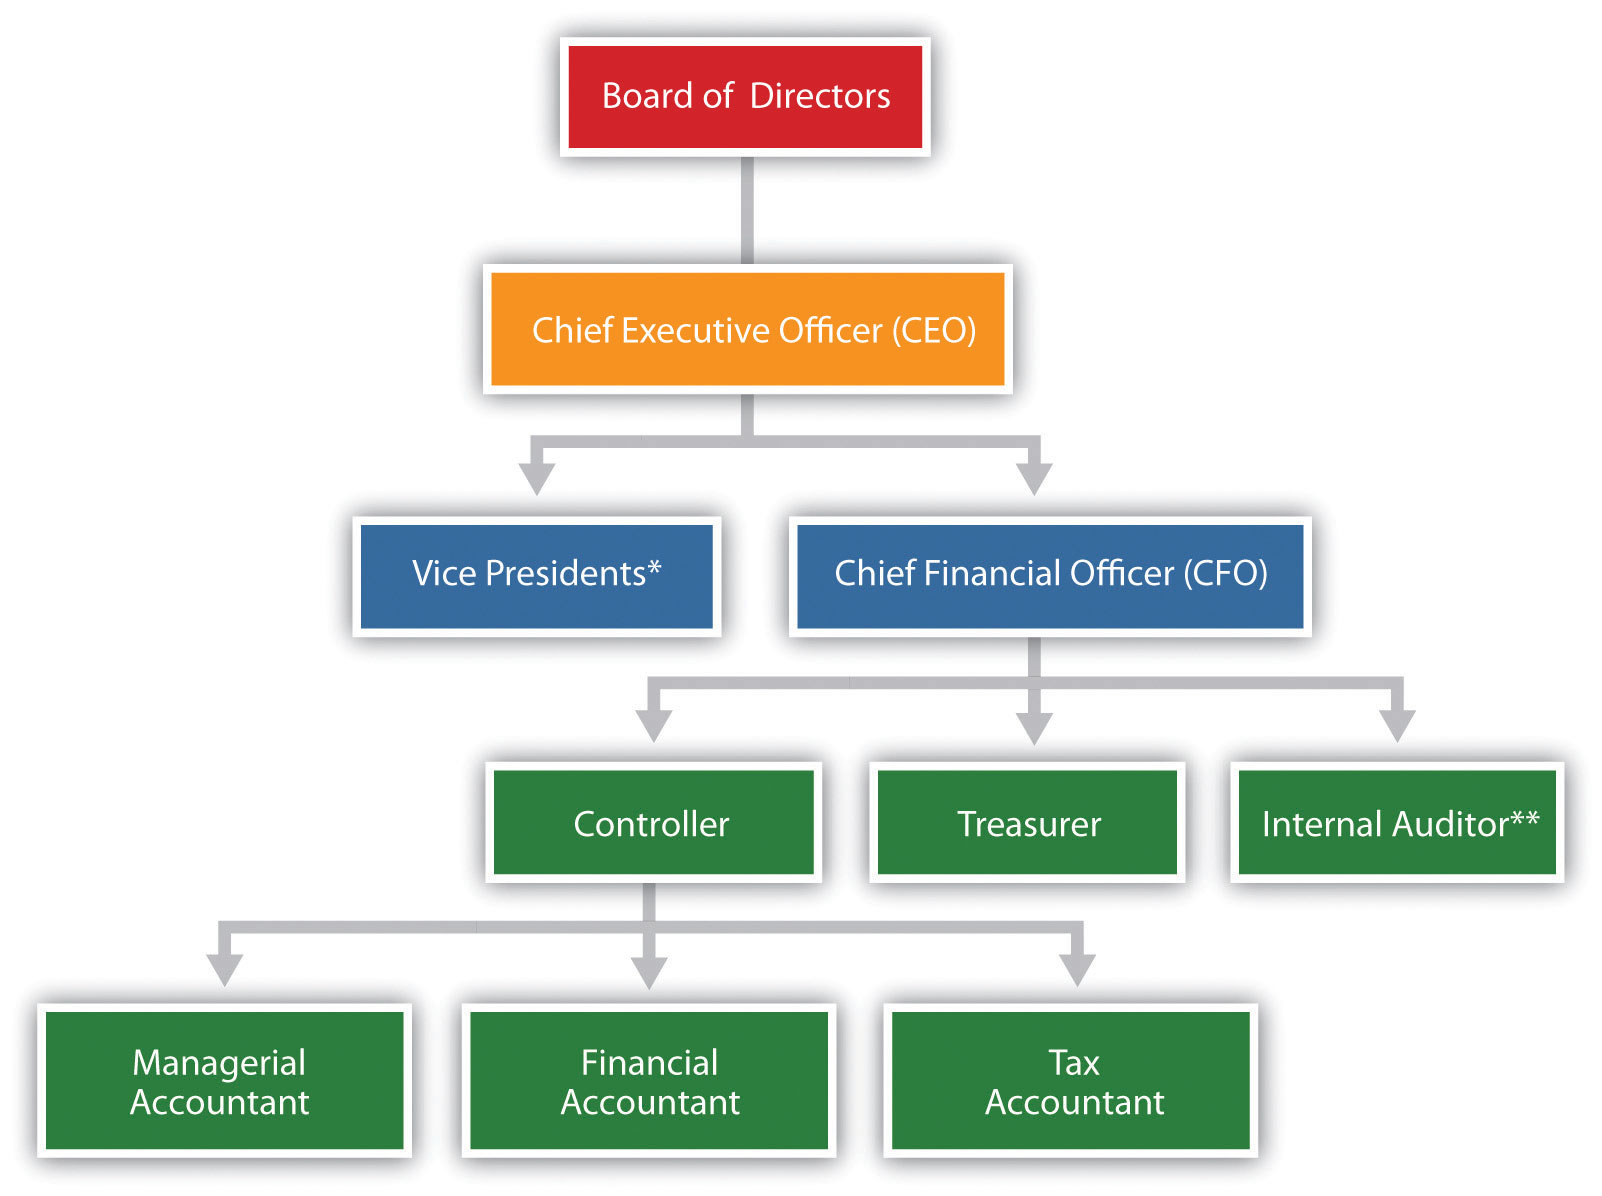 Accounting Department Organizational Chart - targetfasr